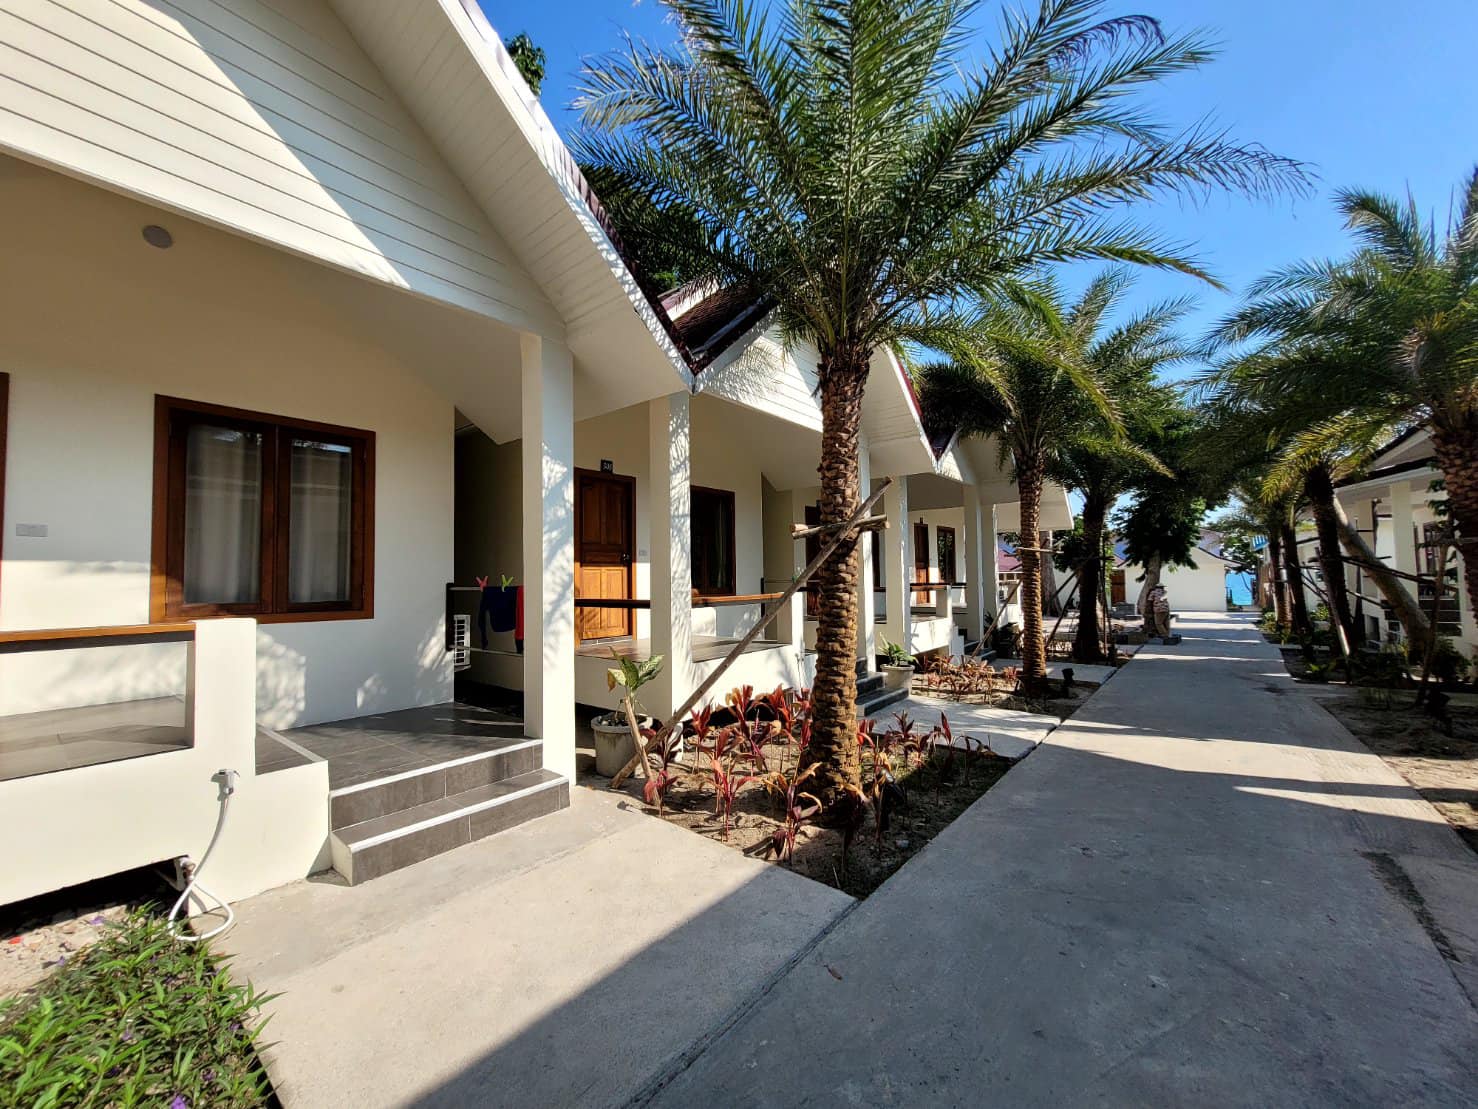 Diamond Beach Resort (ไดมอนด์ บีช รีสอร์ท) : ห้อง Standard Bungalow 2 ท่าน, เกาะเสม็ด